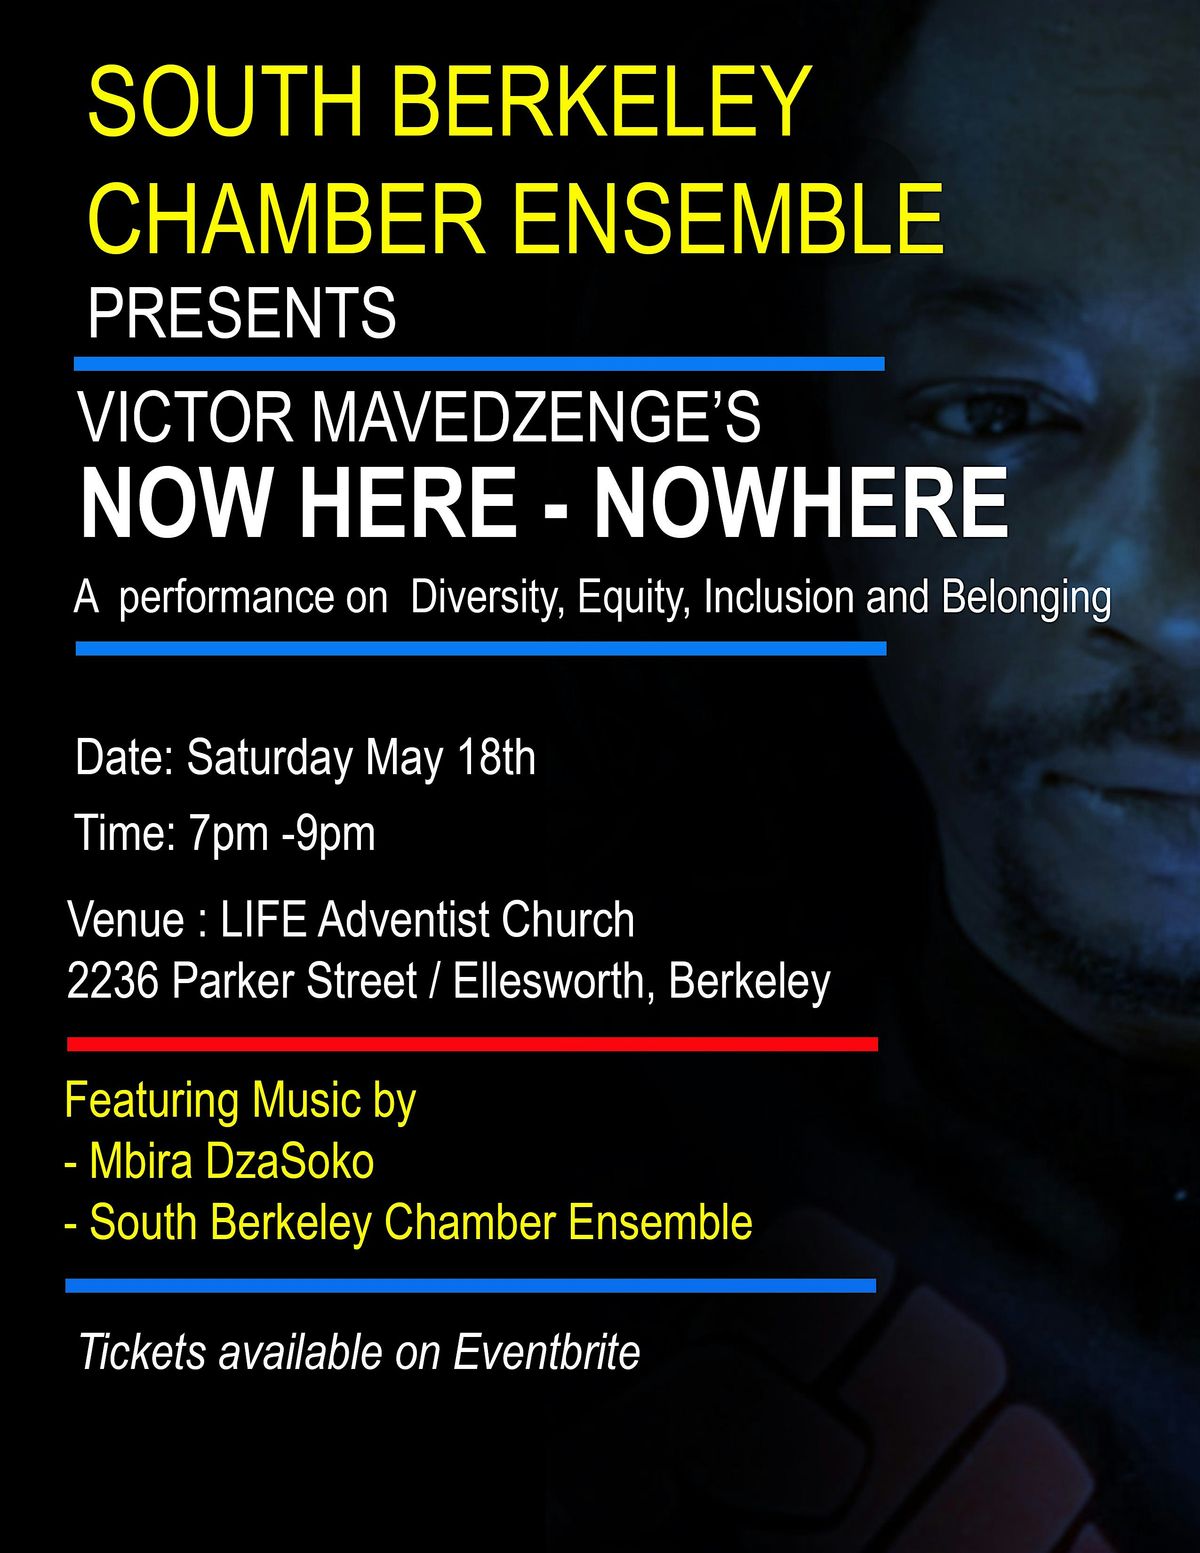 South Berkeley Chamber Ensemble  \/ Victor Mavedzenge's "Now here - Nowhere"